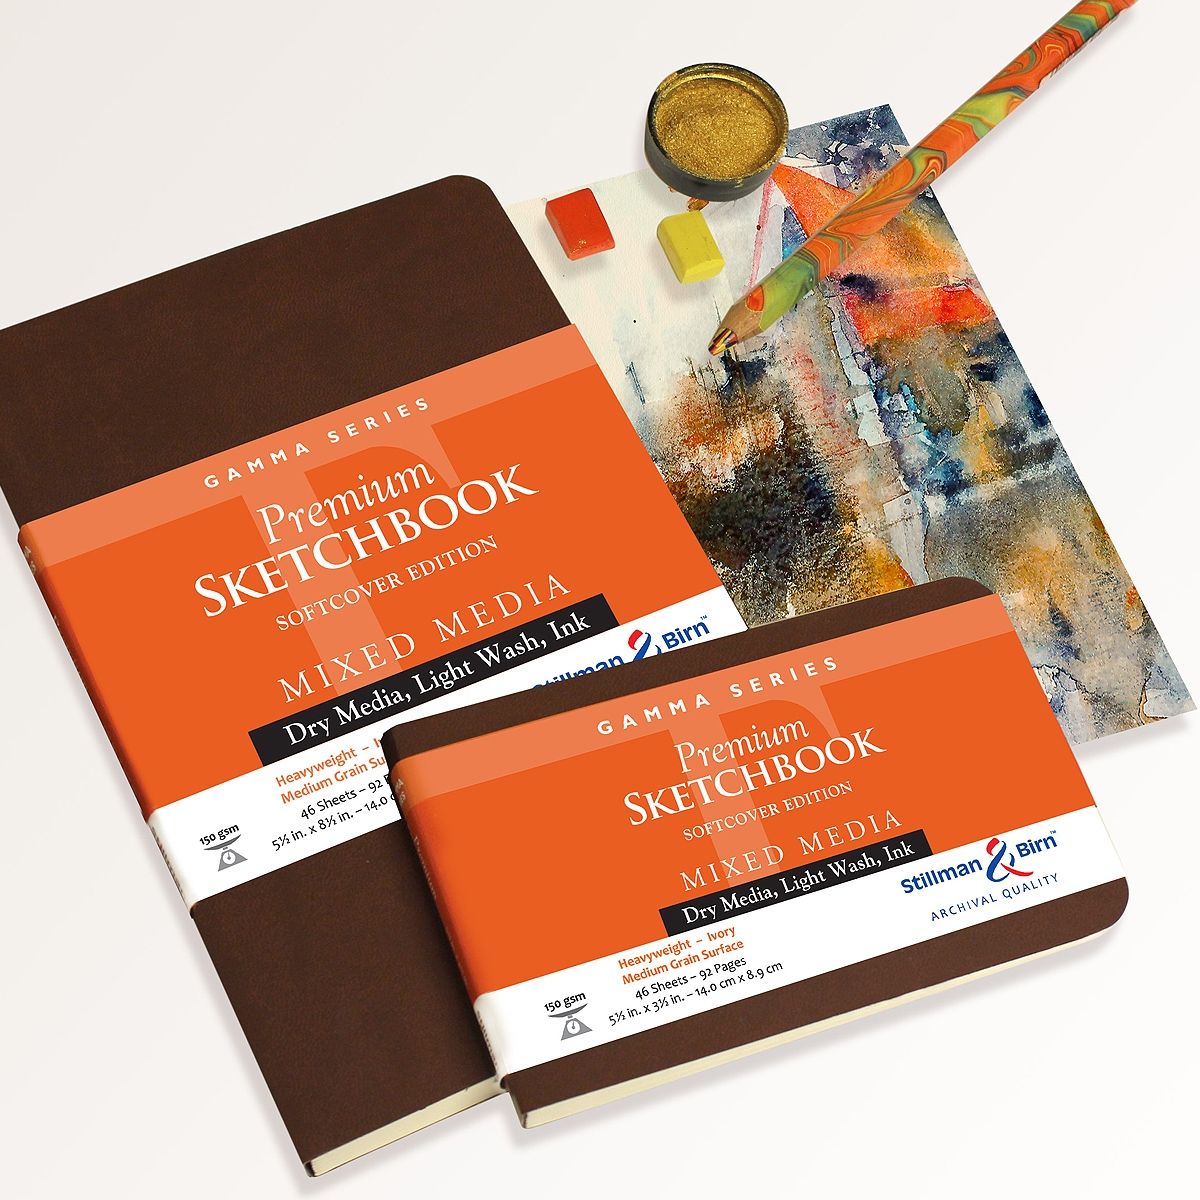 Stillman & Birn Softcover Sketchbook Gamma Series